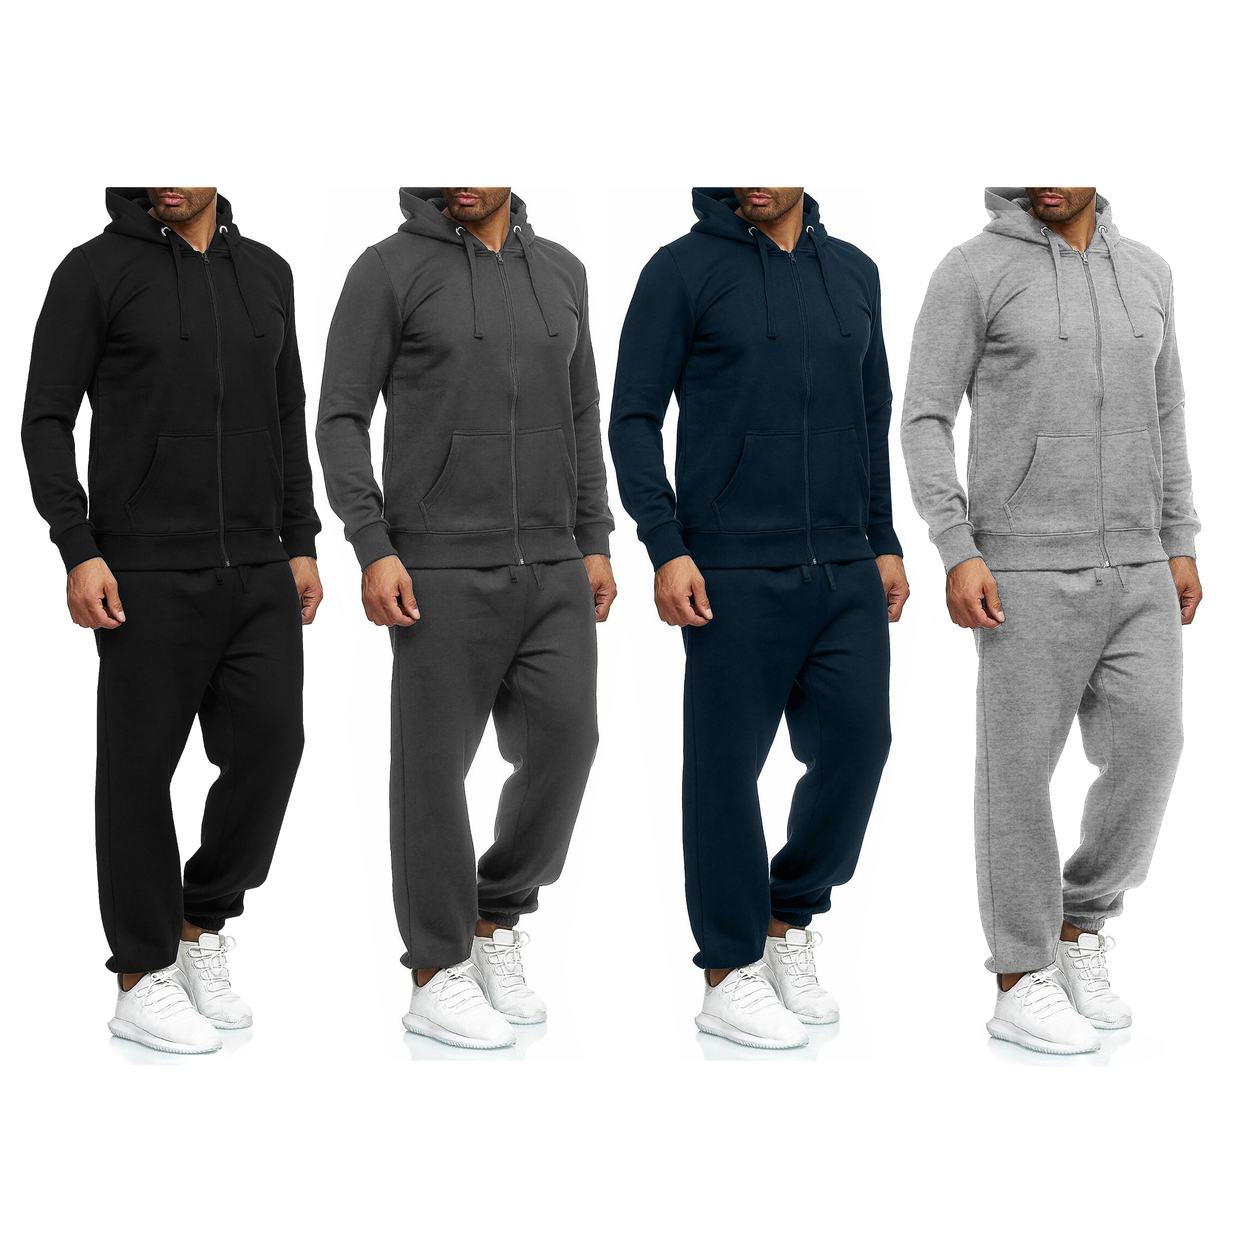 2/4-Piece: Men's Winter Warm Cozy Athletic Multi-Pockets BIG & TALL Sweatsuit Set - Navy, 1, Xx-large